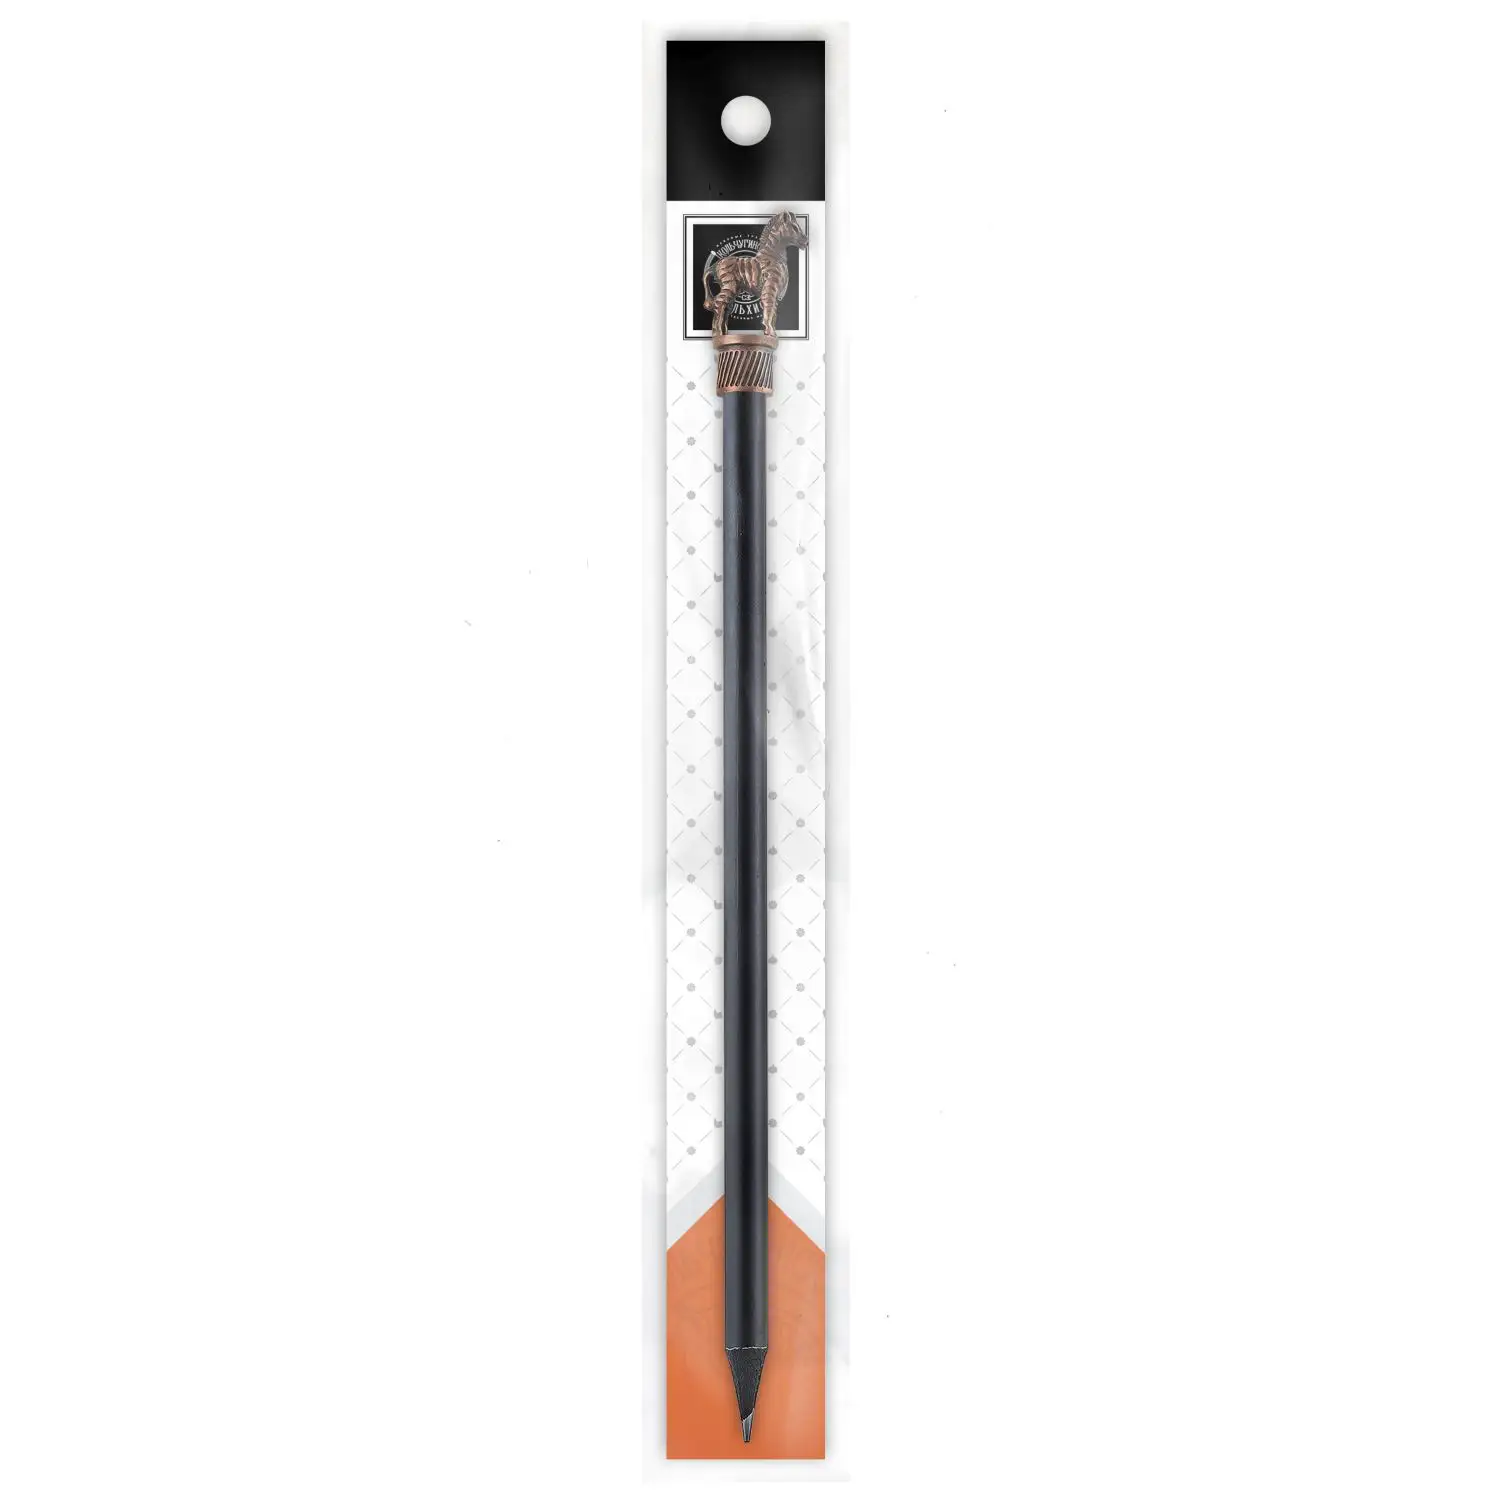 Карандаш Сафари-Зебра медный с чернением карандаш с литым элементом сафари зебра латунный в футляре